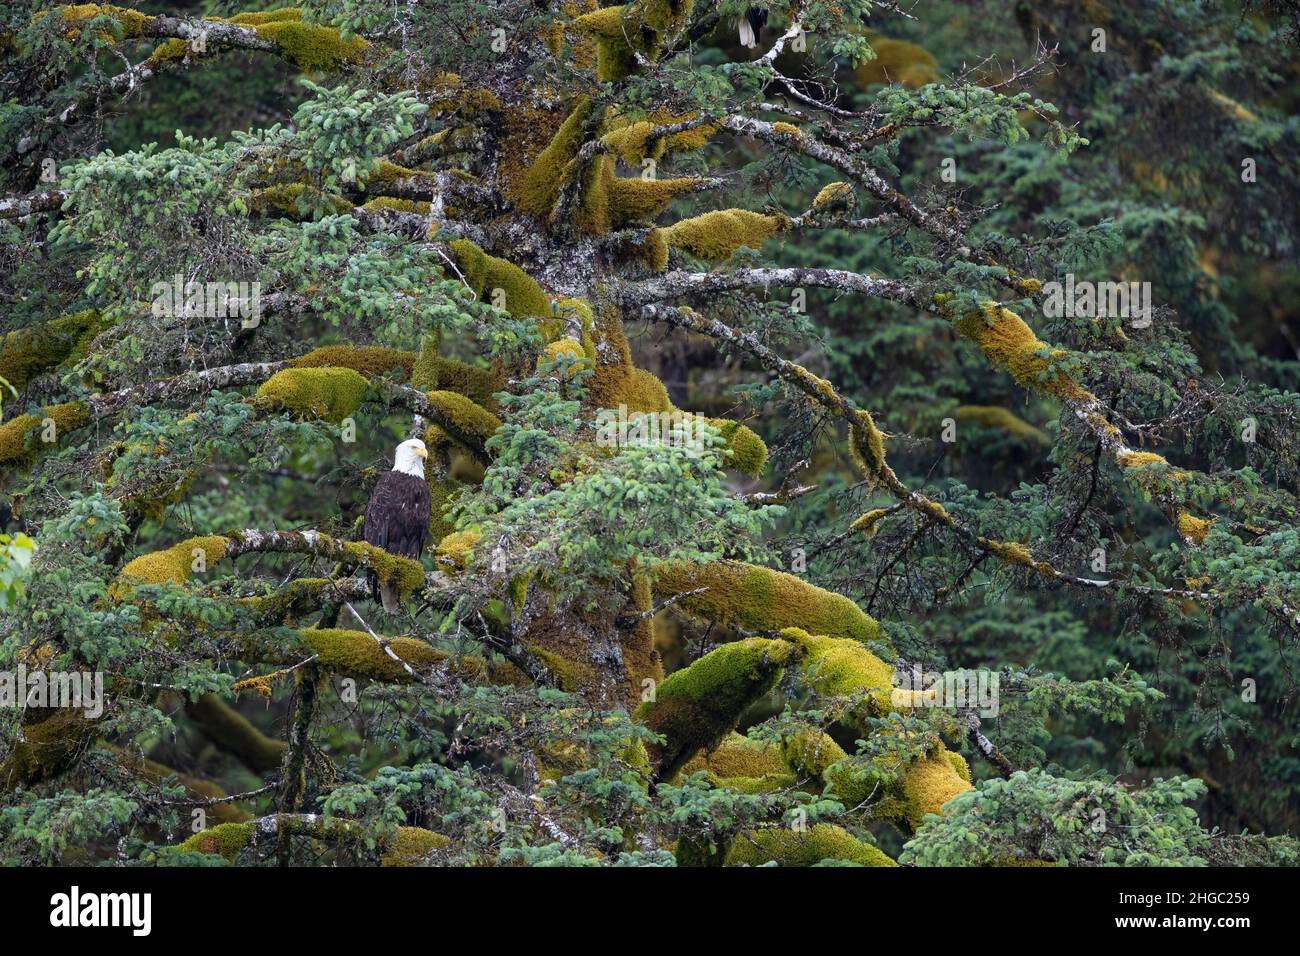 Adult bald eagle, Haliaeetus leucocephalus, in Sitka spruce tree near Gustavus, Southeast Alaska, USA. Stock Photo